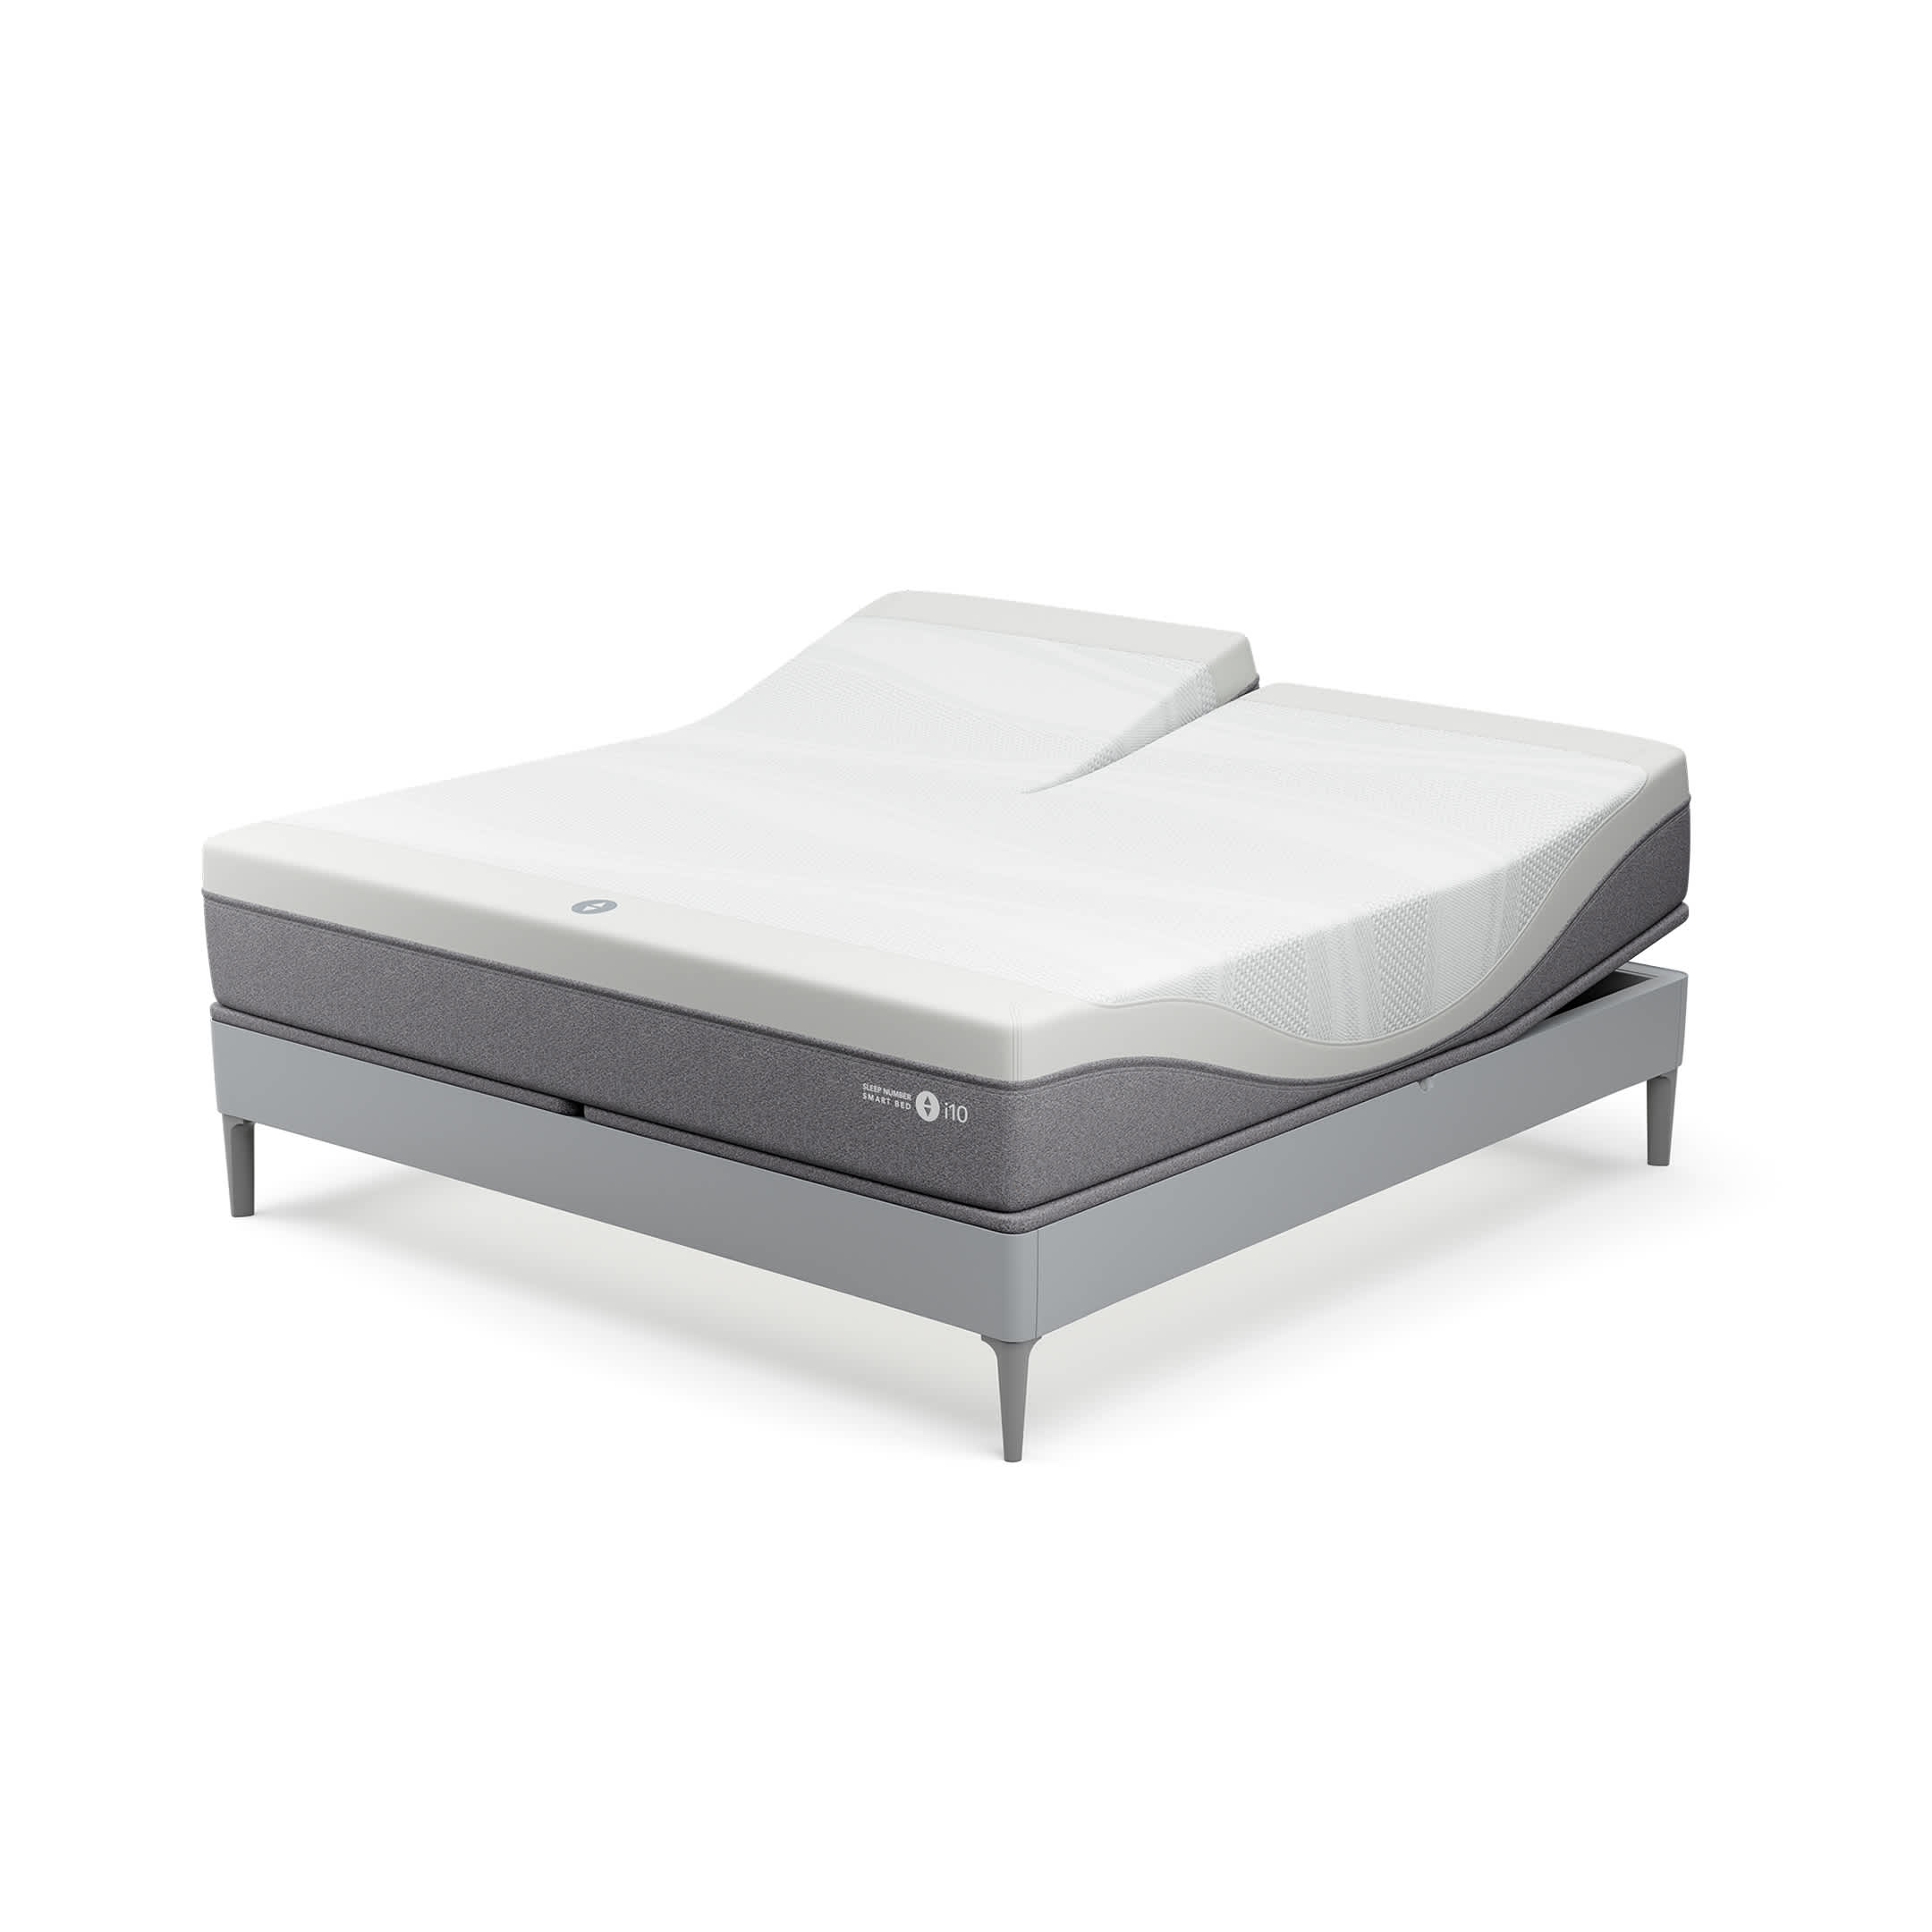 1 Adjustable Beds and Premium Mattresses